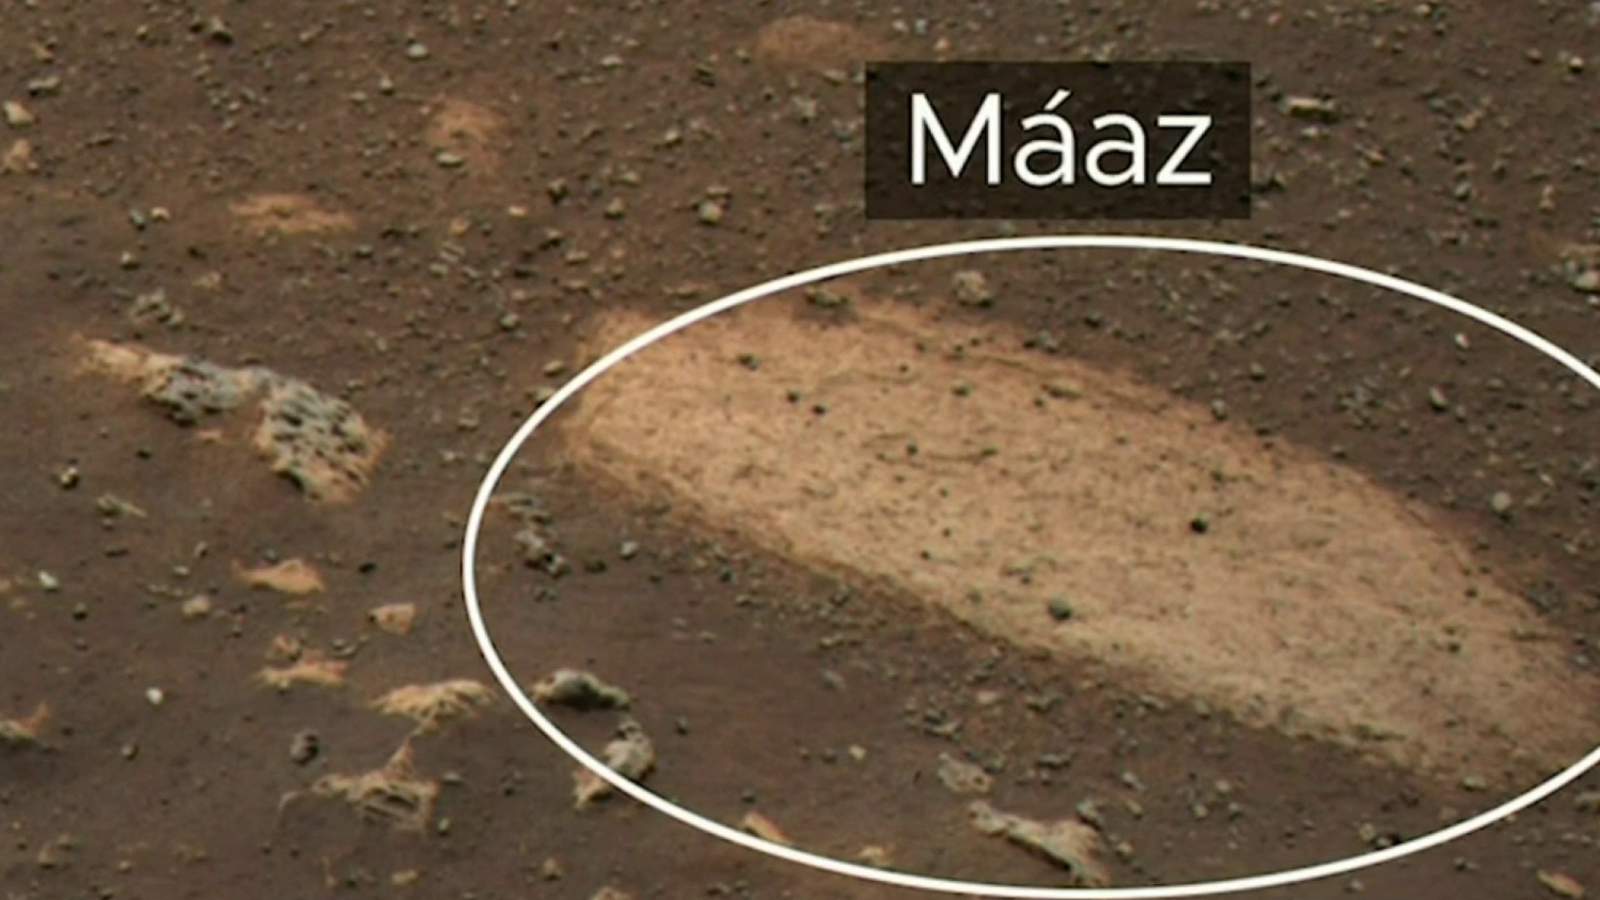 NASA uses Navajo language to name interest points on Mars